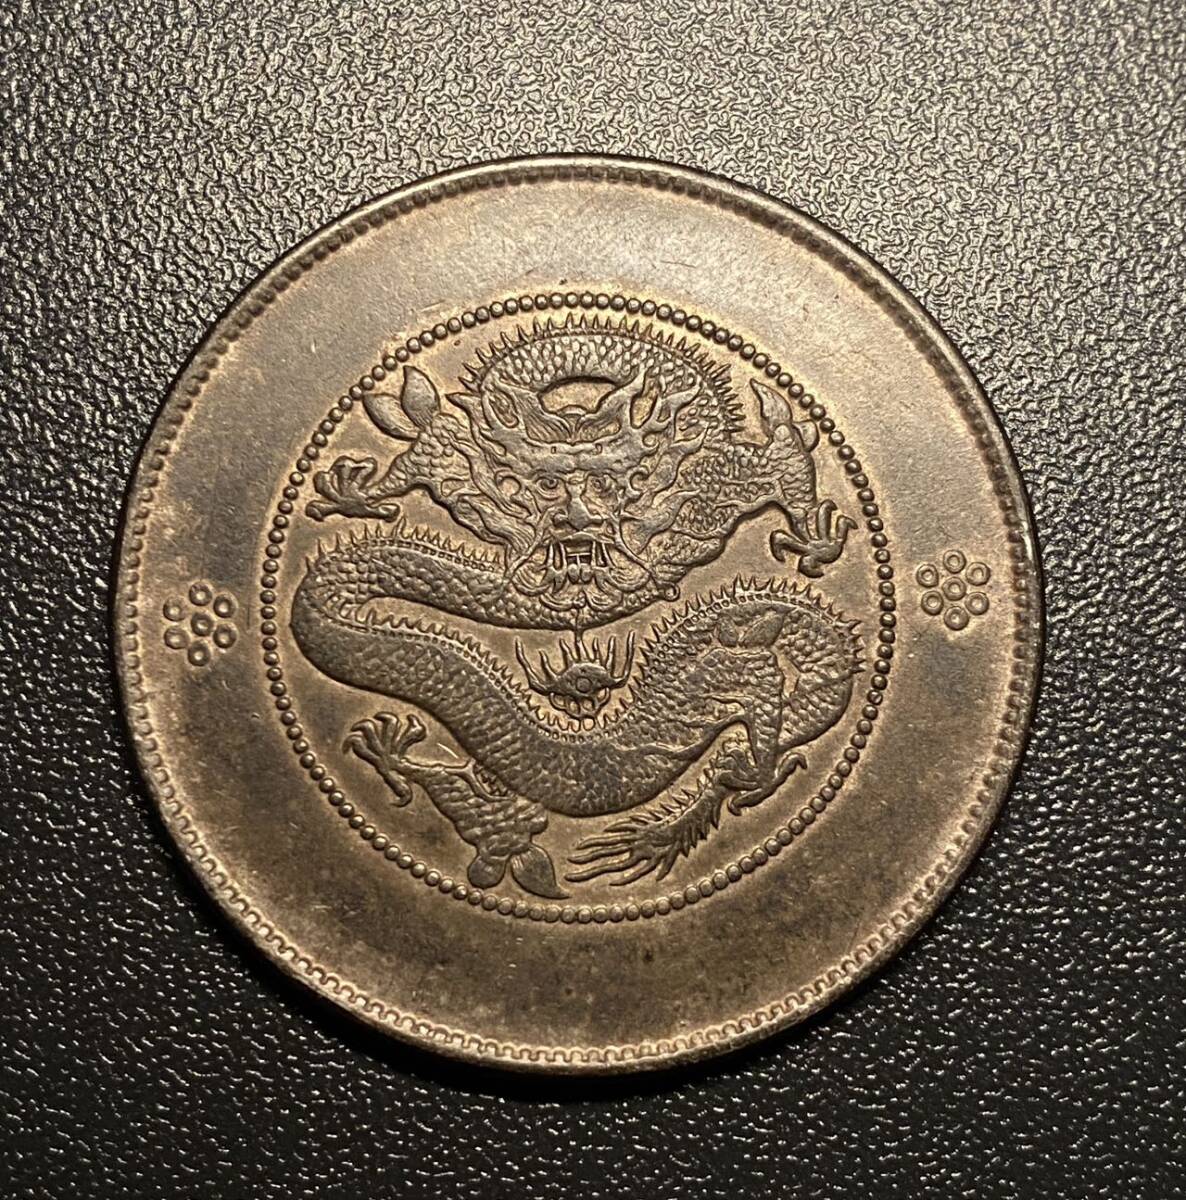 光緒元寶 雲南省造一円銀貨 中国古銭 竜 コイン 硬貨 古銭 美品 レアの画像2